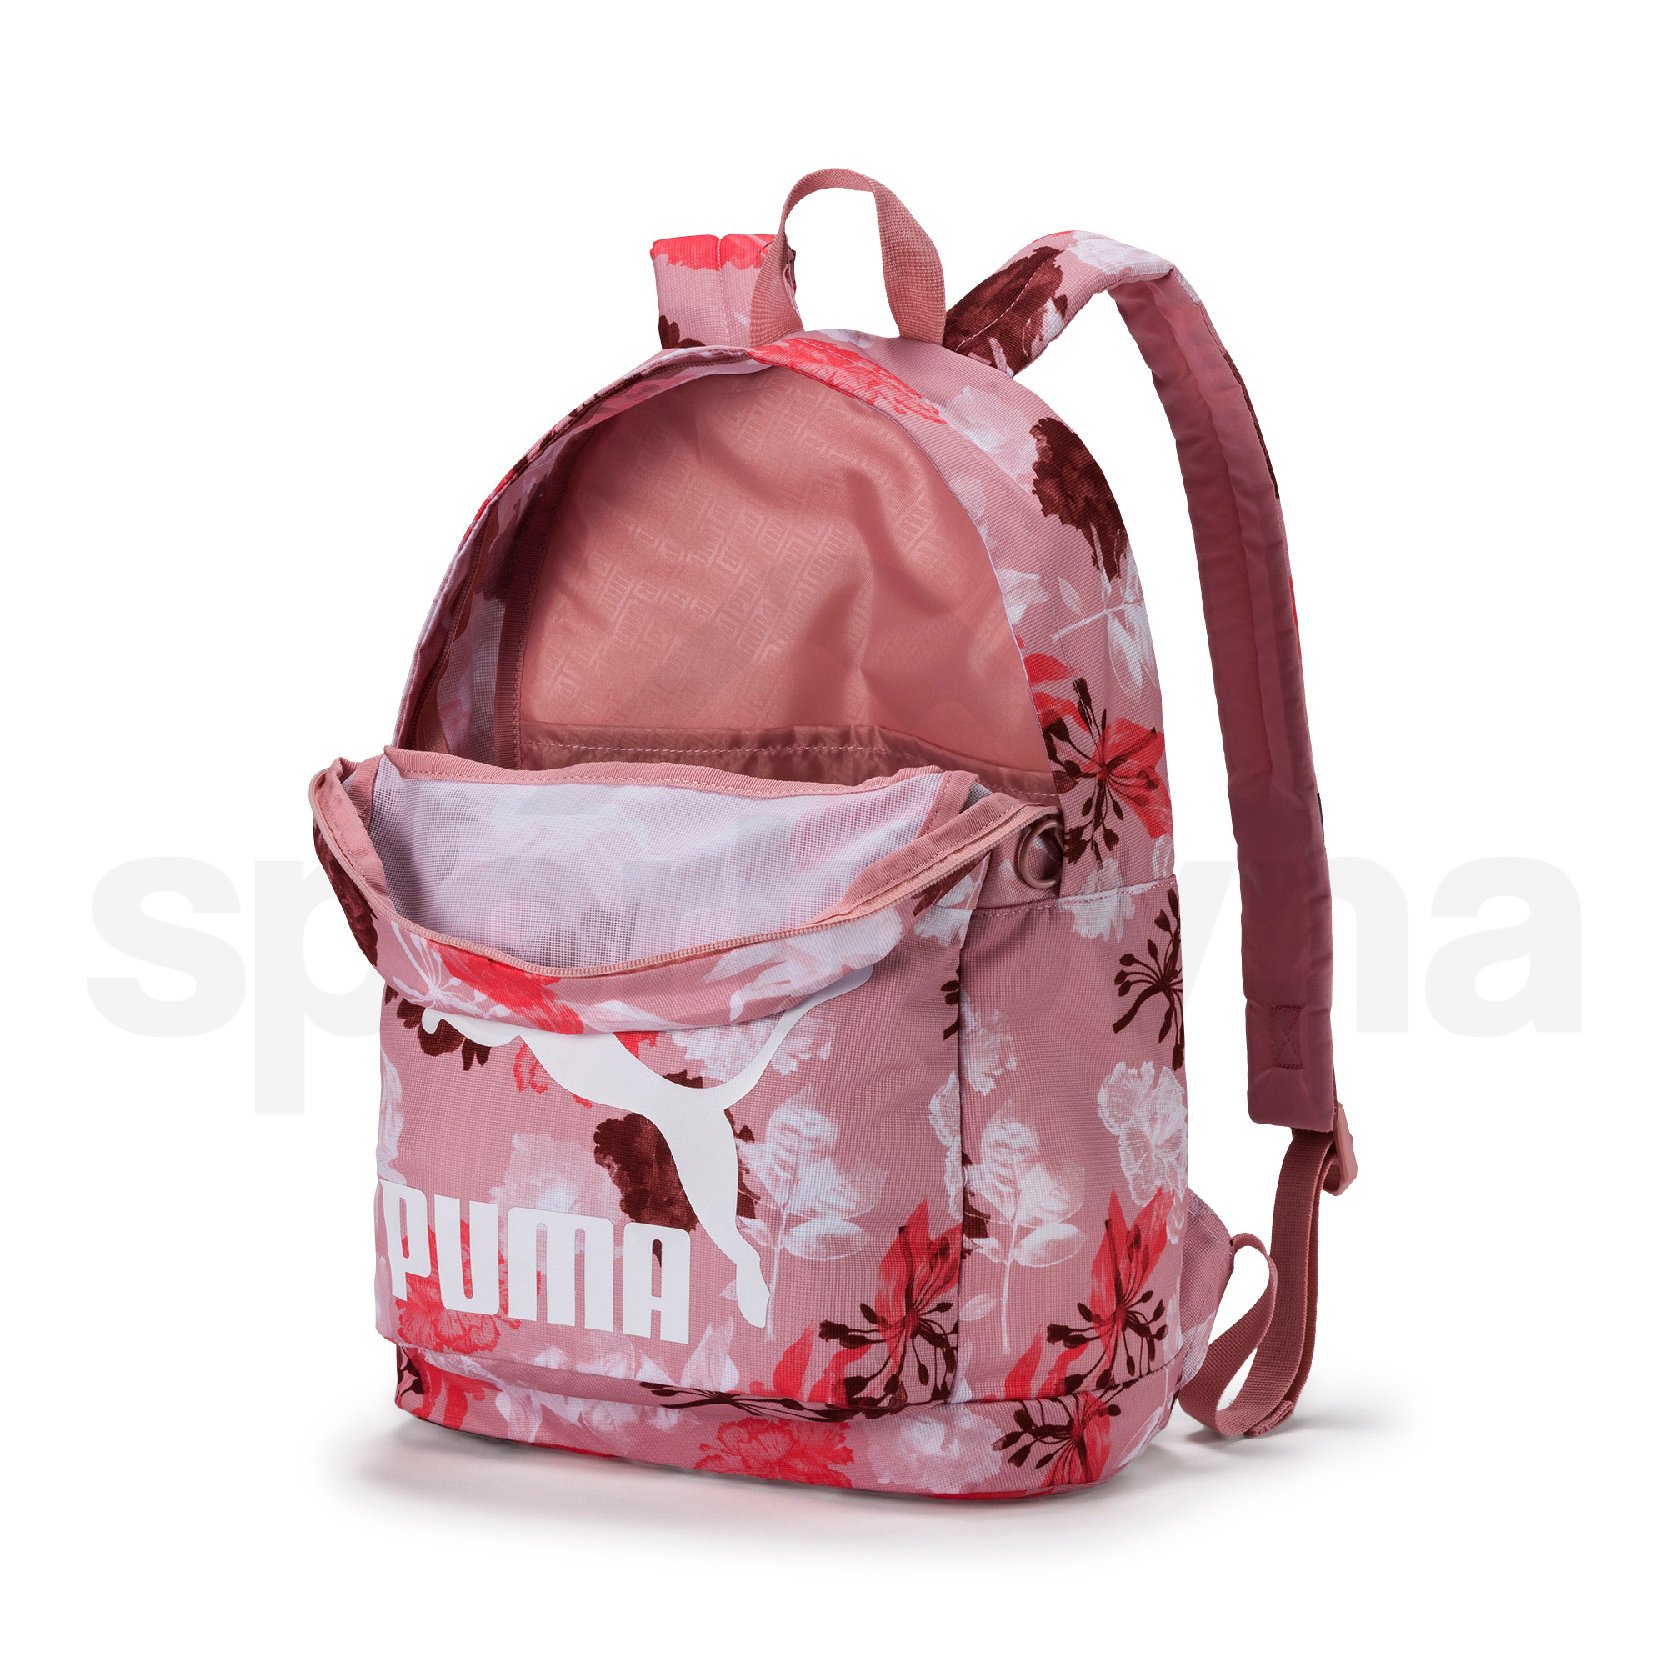 Batoh Puma Originals Backpack - růžová